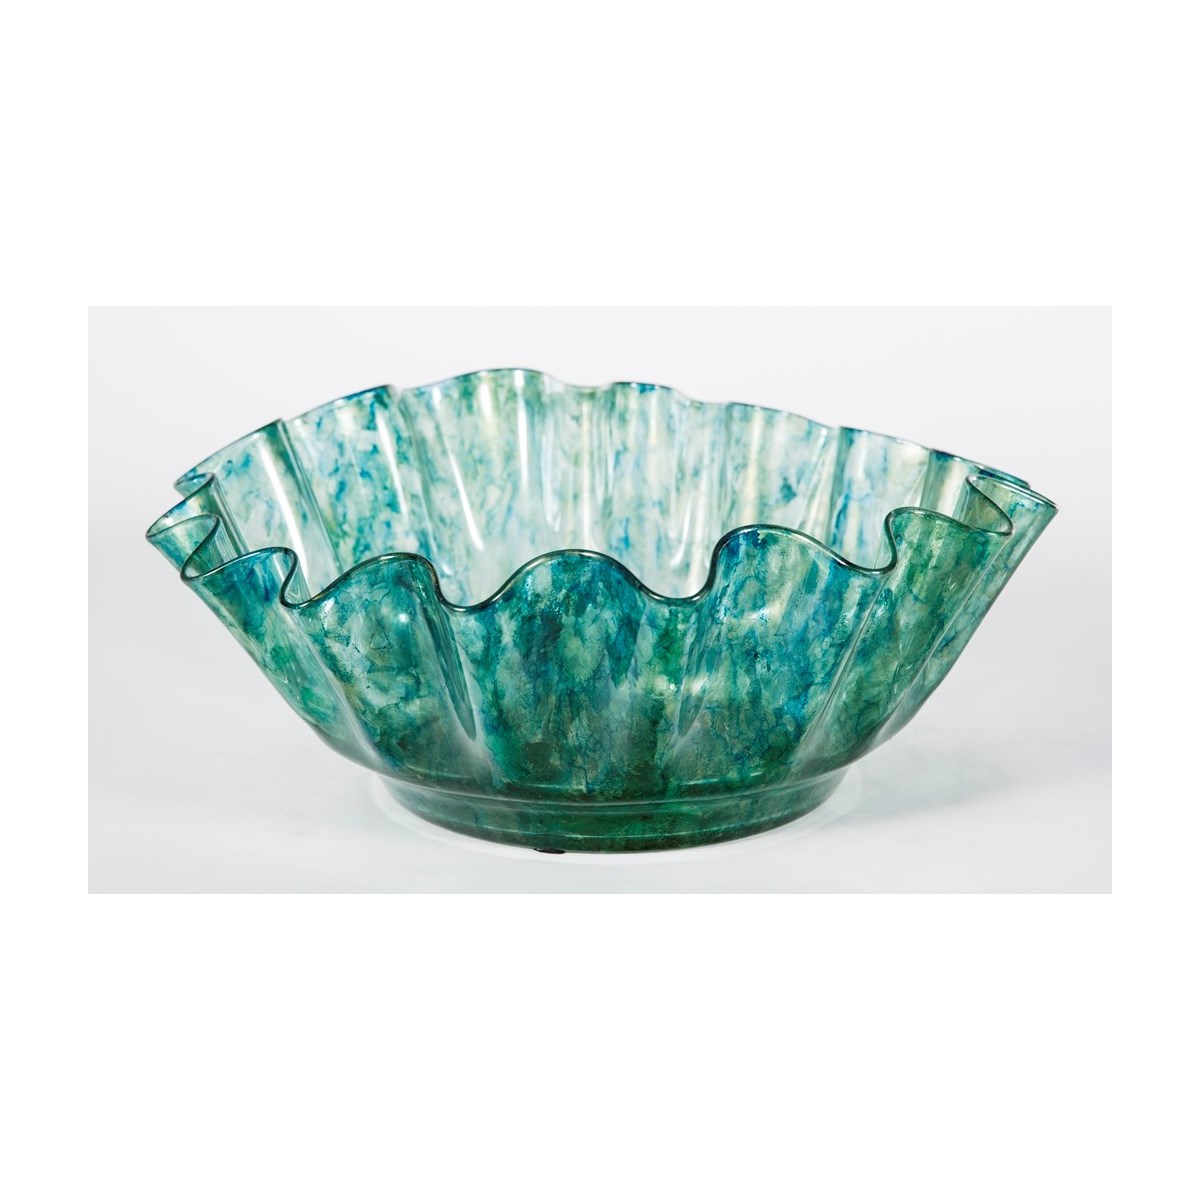 Large Ruffle Bowl in Sea Glass Finish